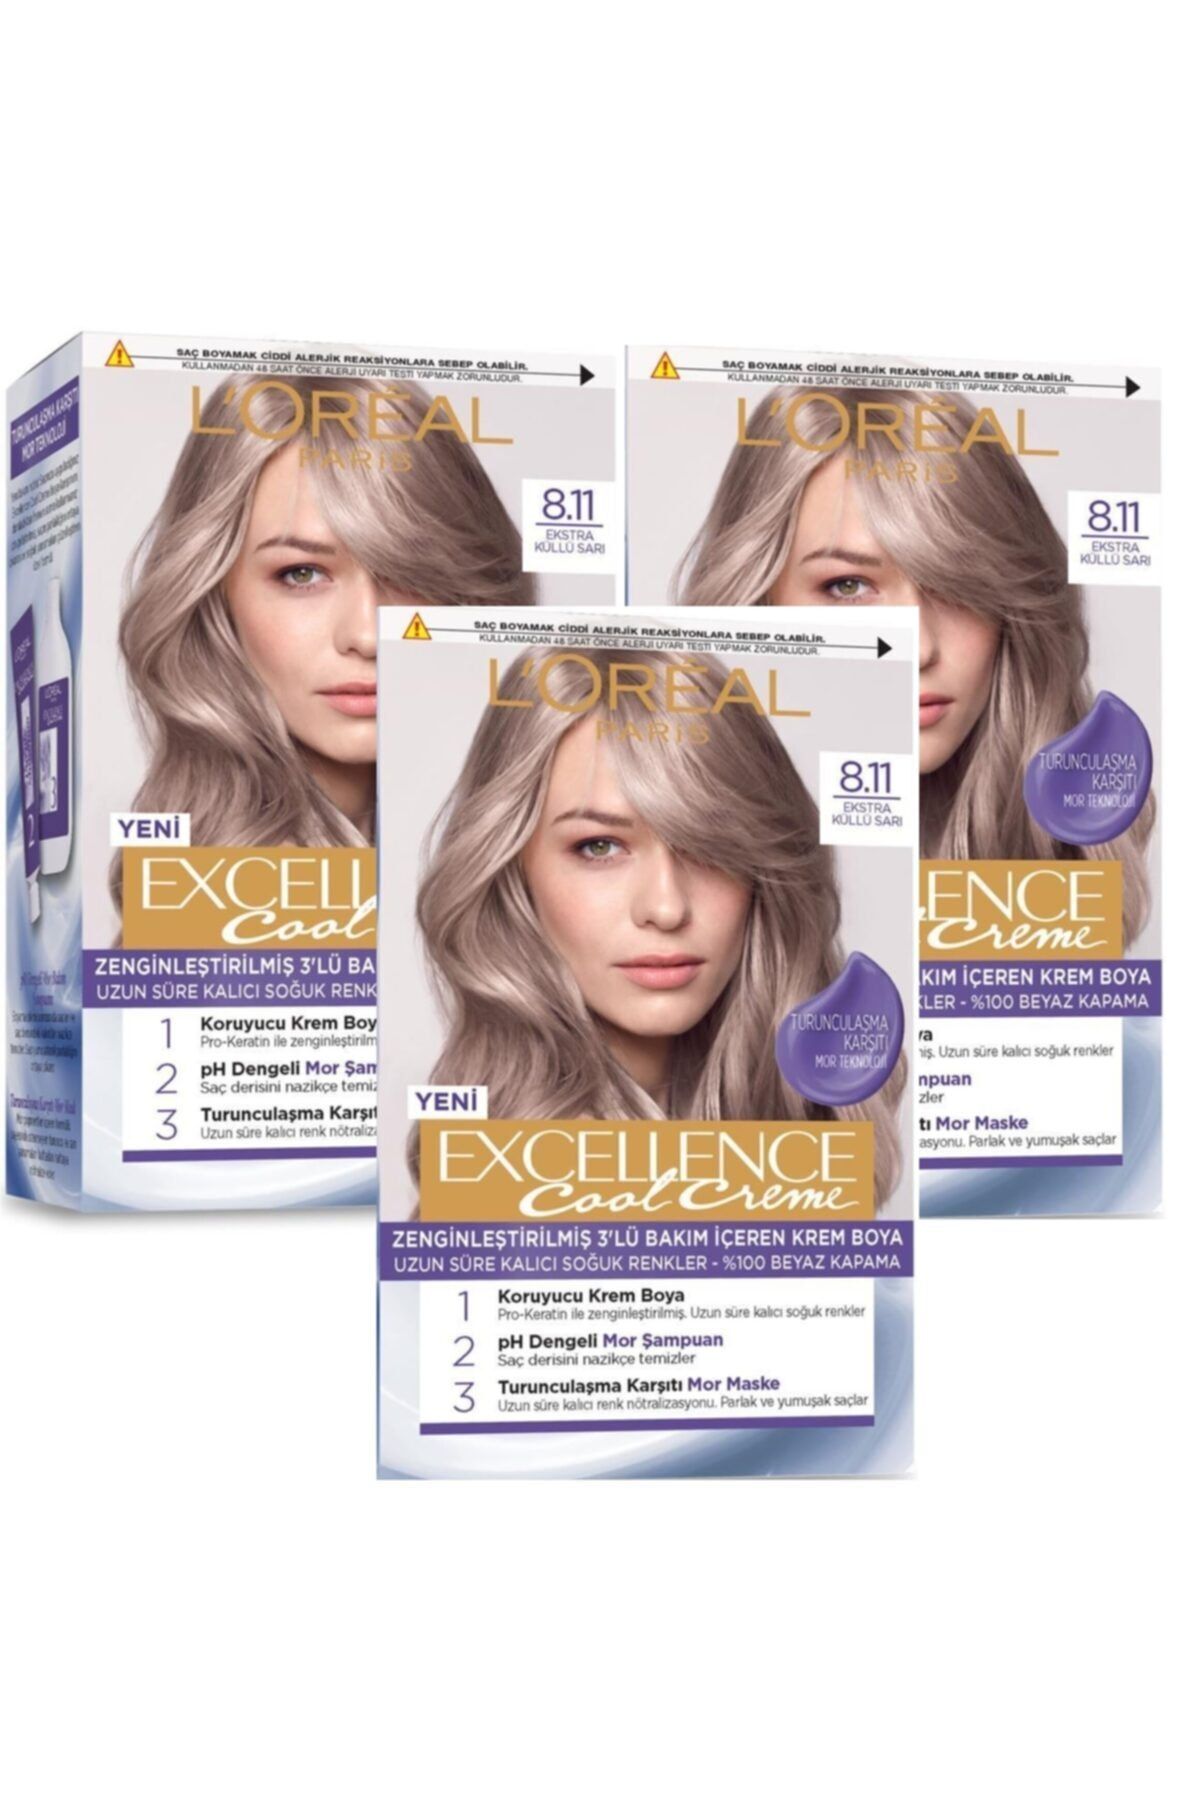 L'Oreal Paris Excellence Cool Creme Saç Boyası – 8.11 Ekstra Küllü Sarı 3'lü Set